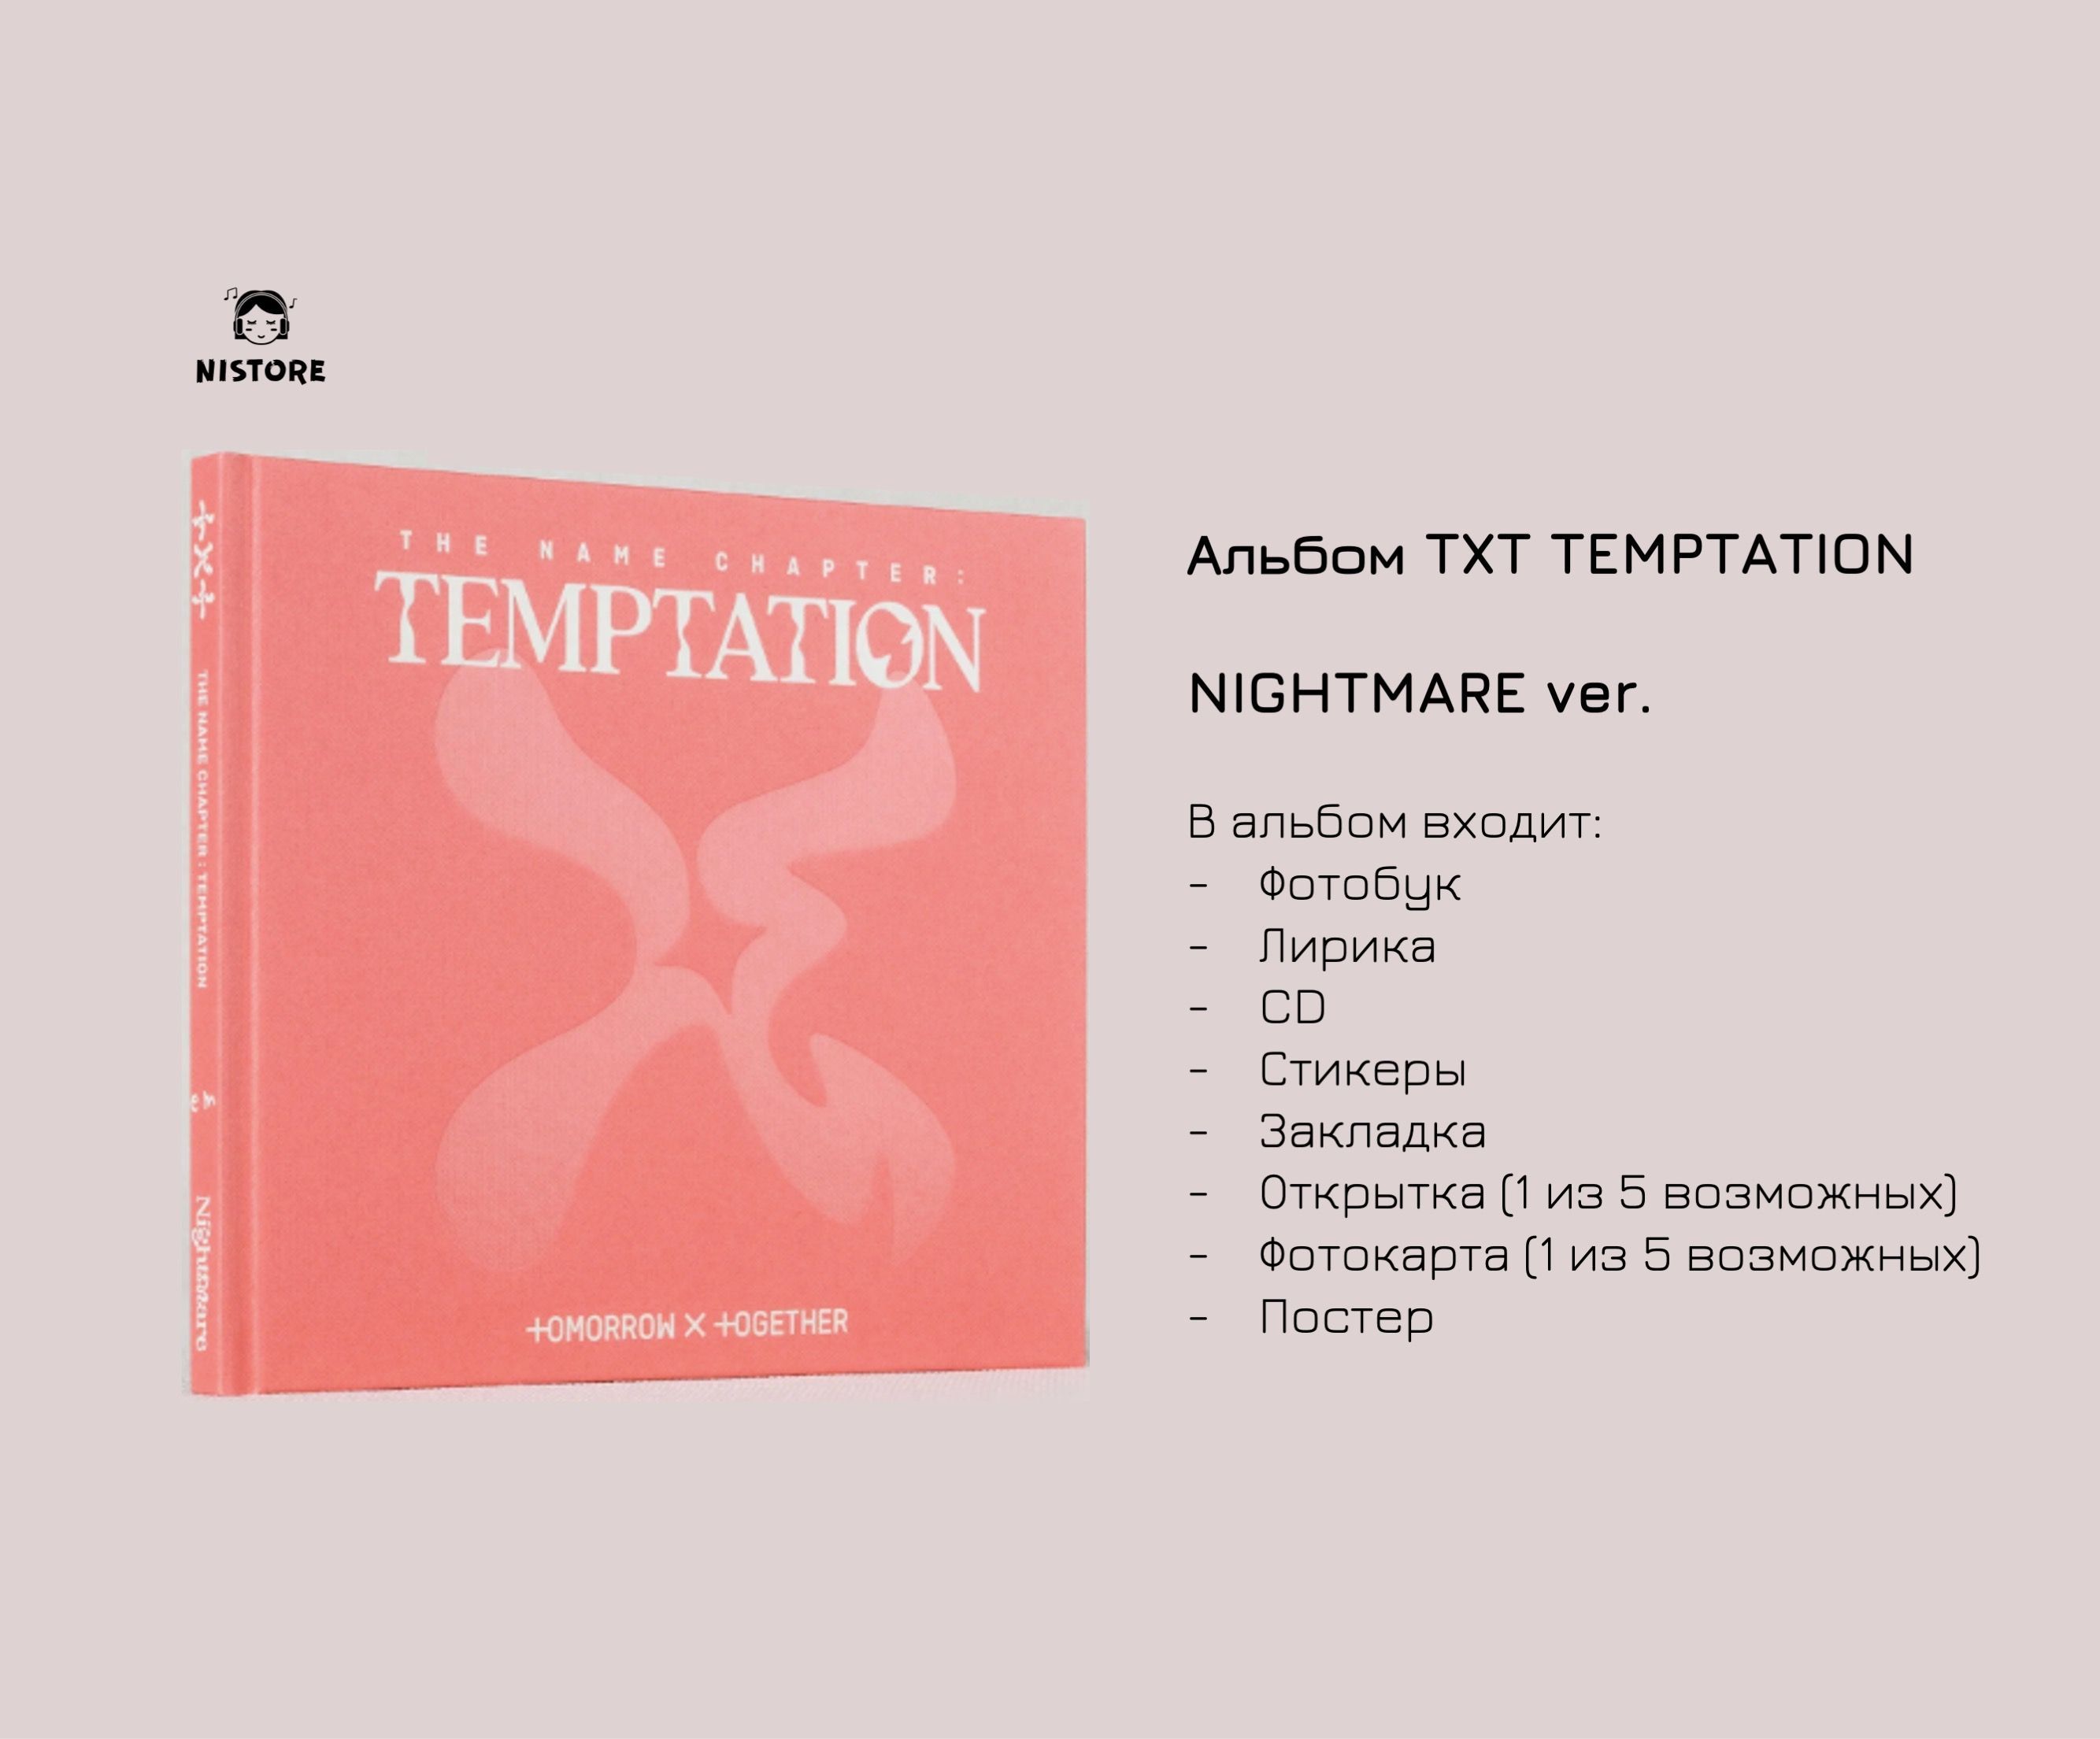 Альбом тхт 2024. Альбом тхт. Альбом тхт Temptation. Txt the name Chapter Temptation альбом. Альбом тхт-Чаптер.